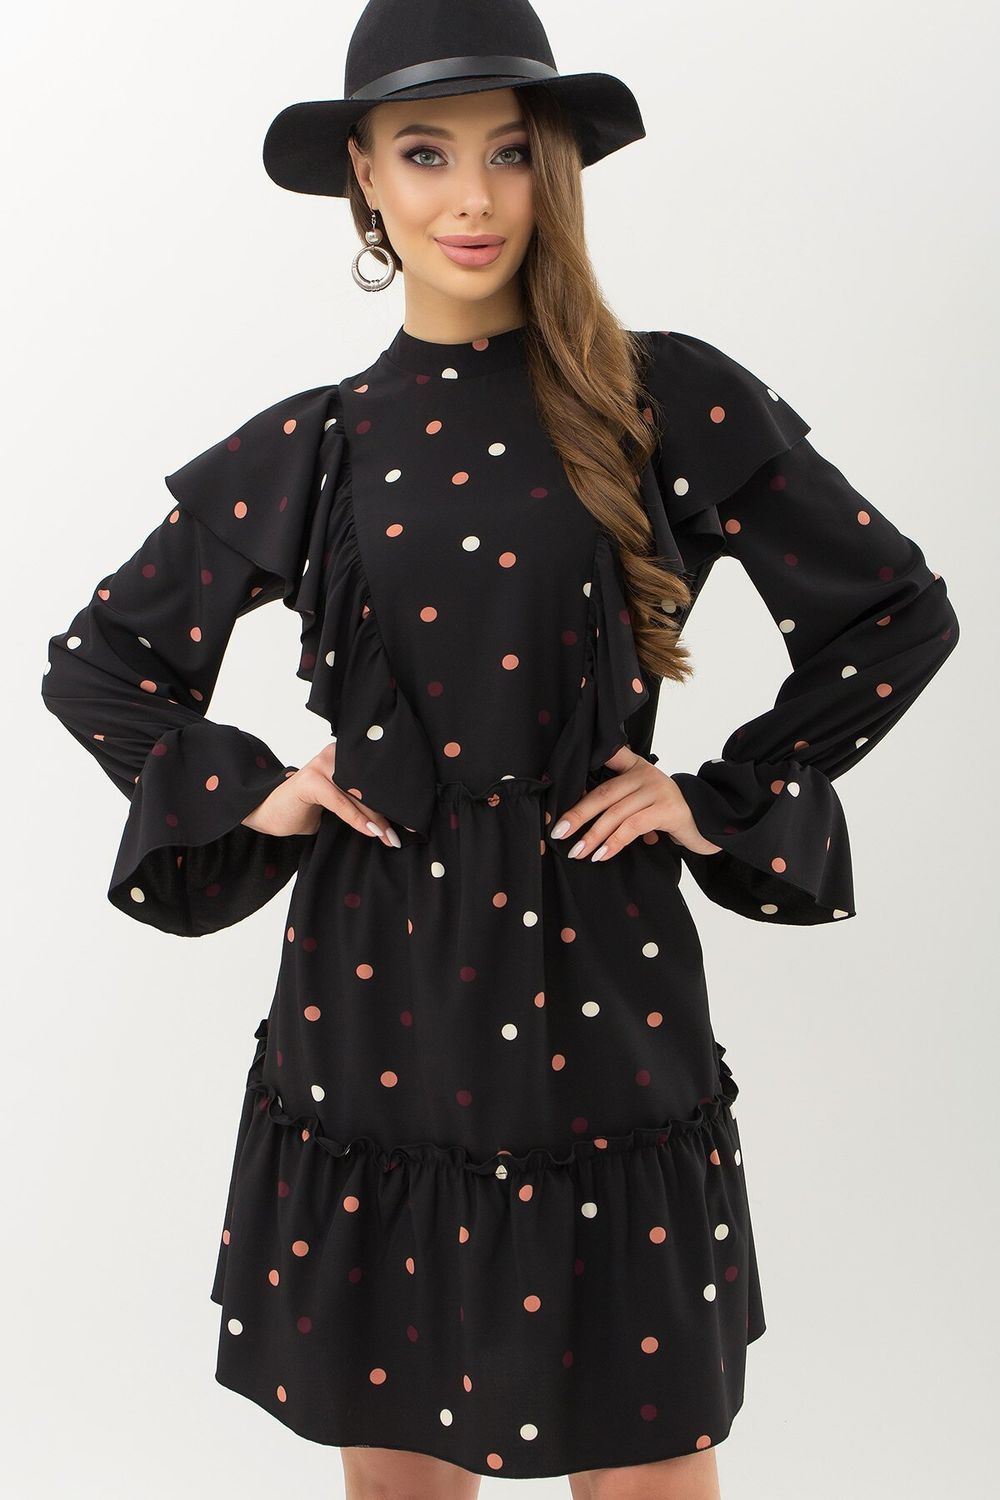 Красиве весняне плаття з оборками в горошок чорне - фото